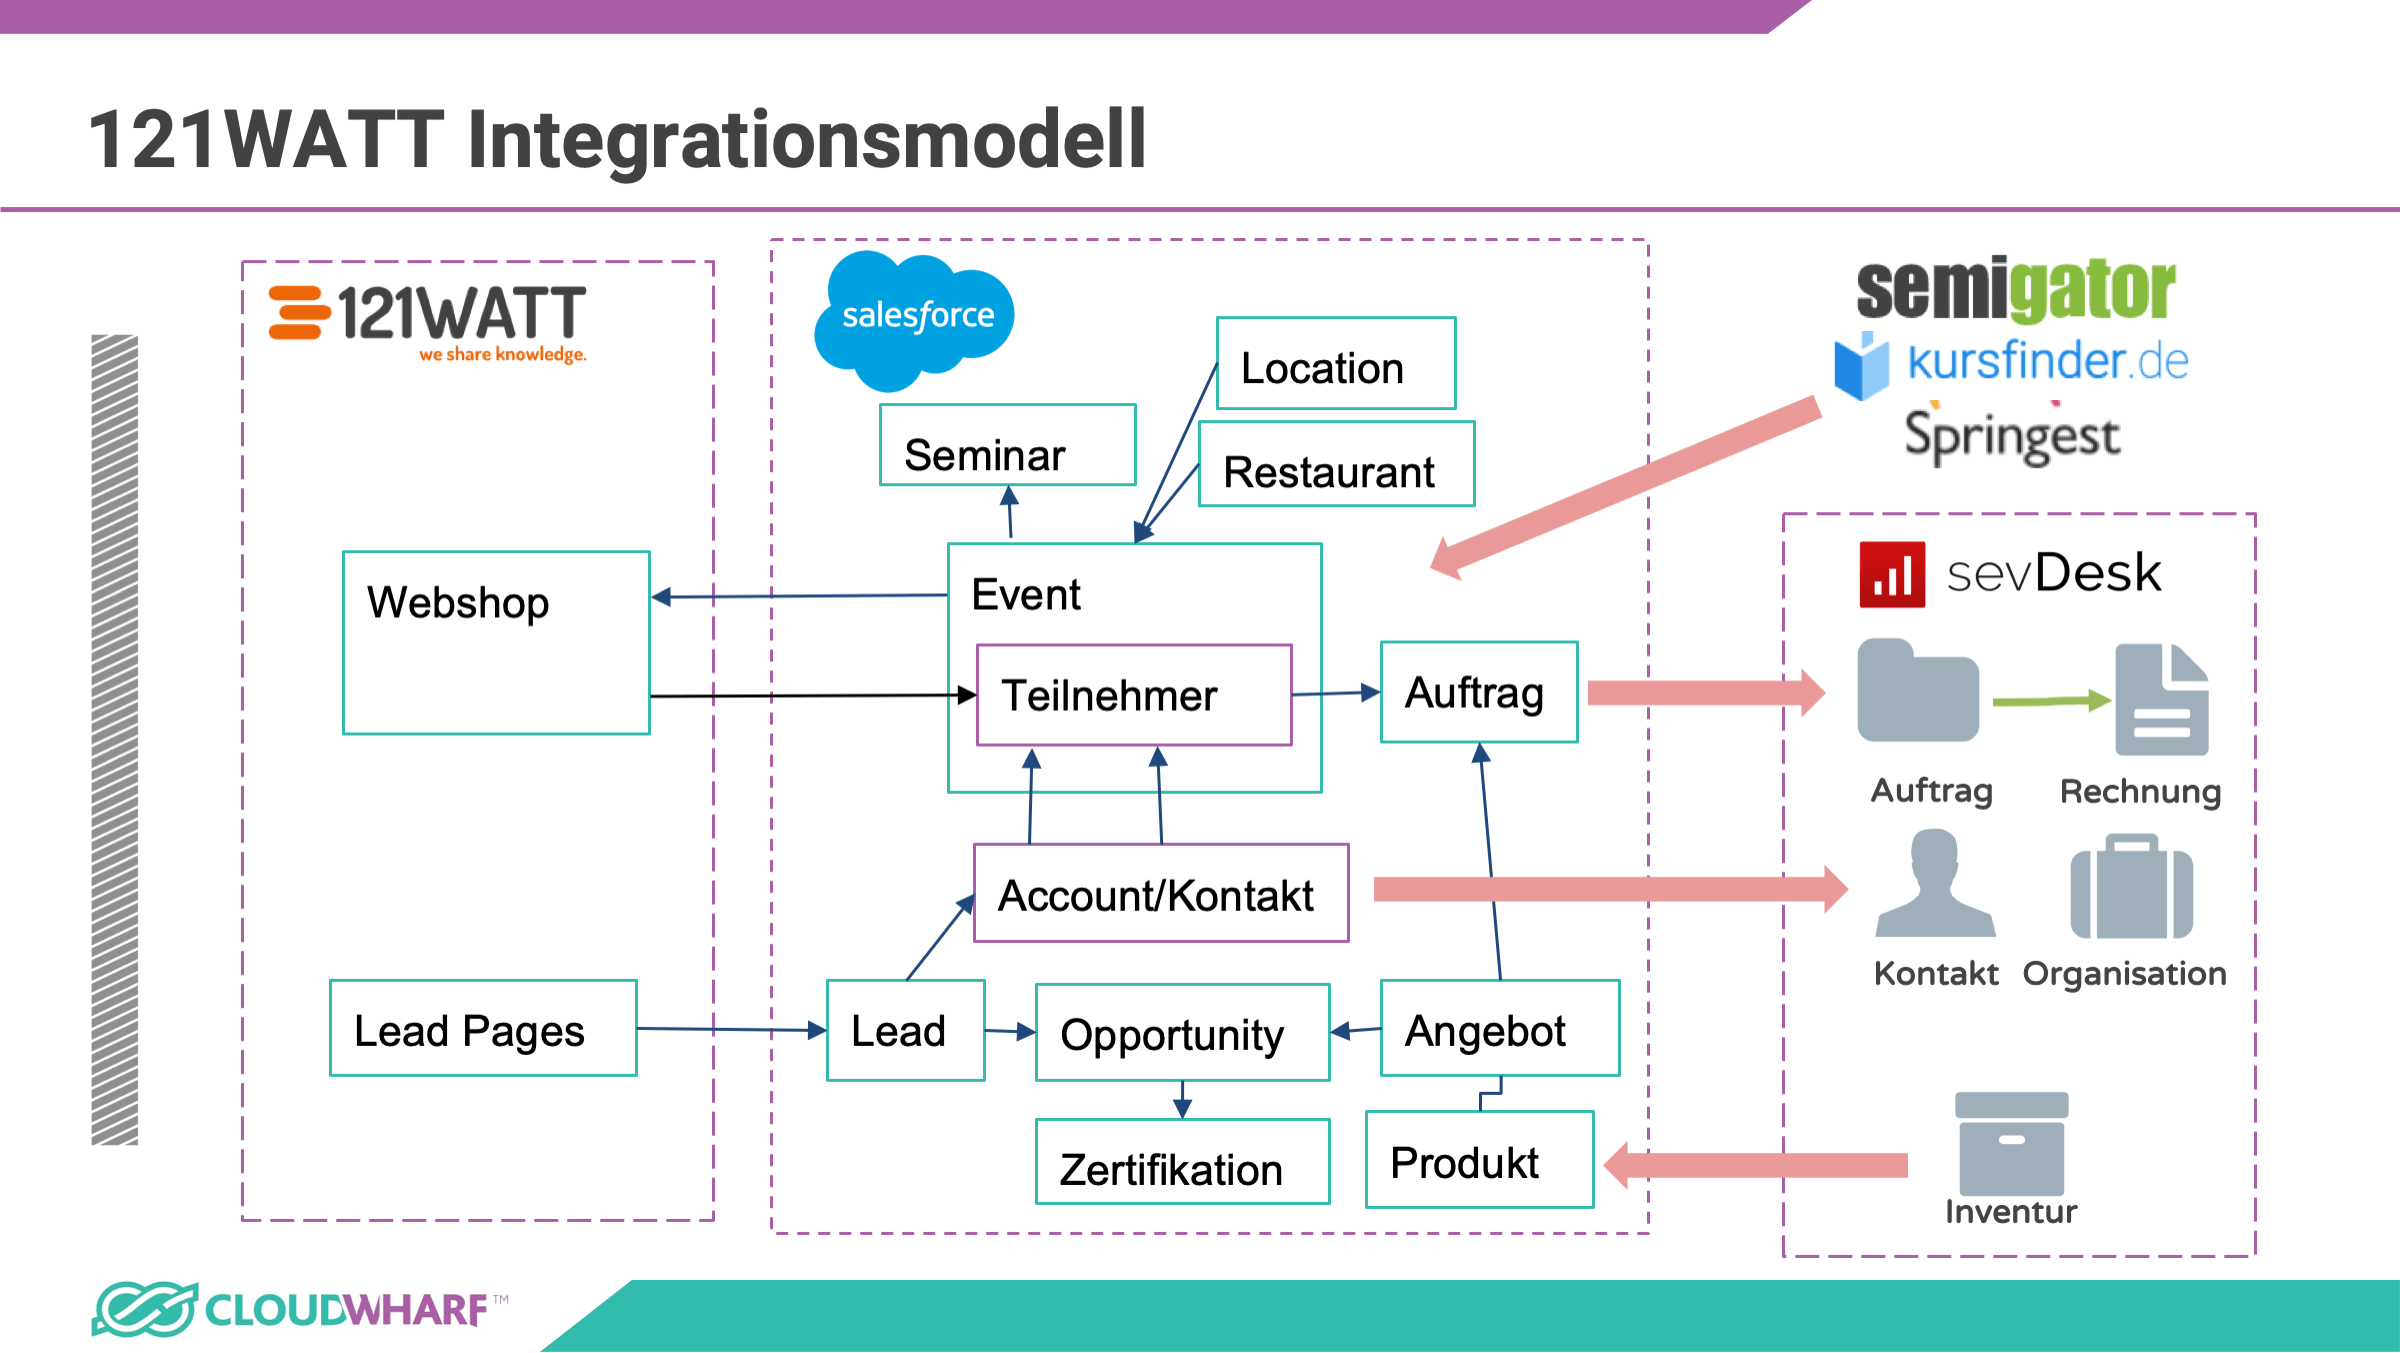 Das Integrationsmodell 121WATT sevDesk für Salesforce